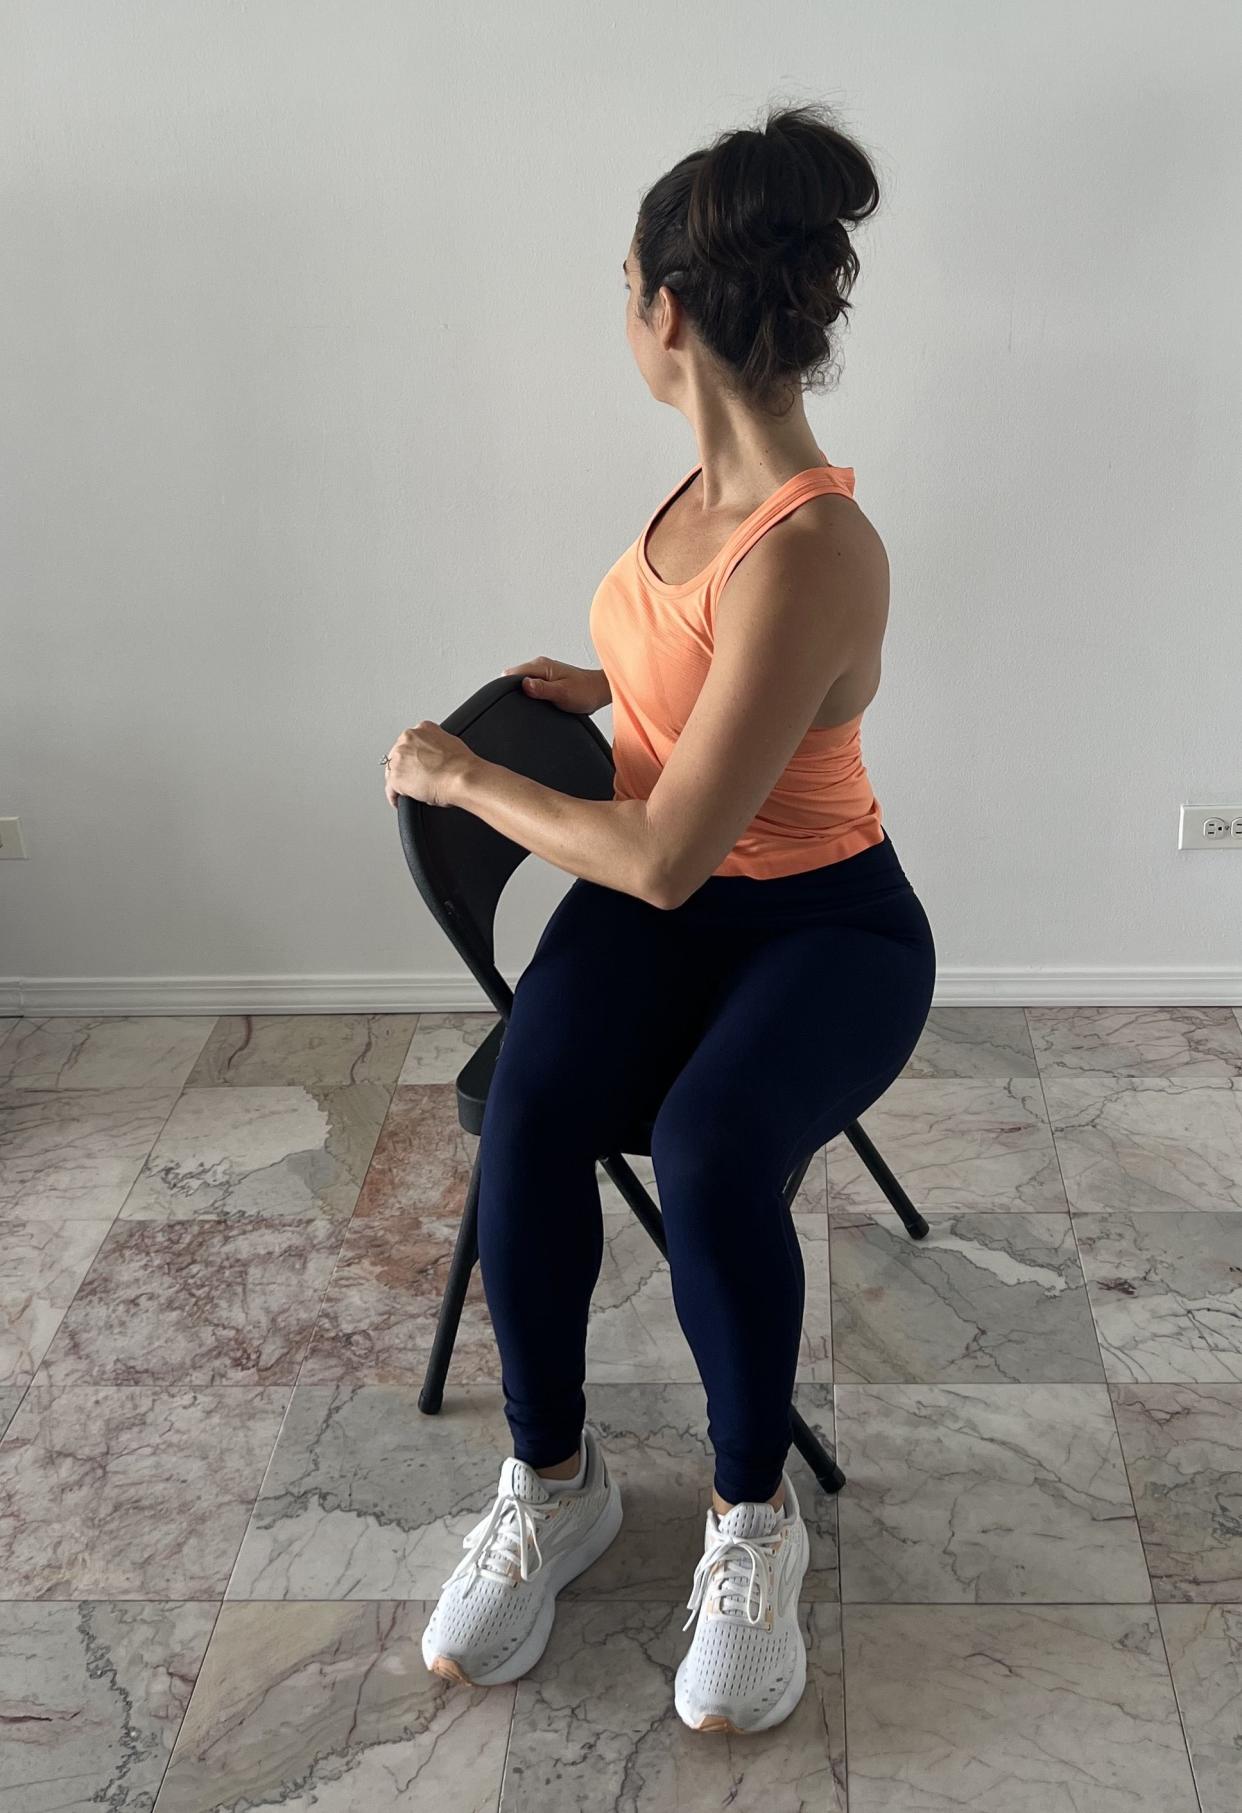 Twist chair yoga pose